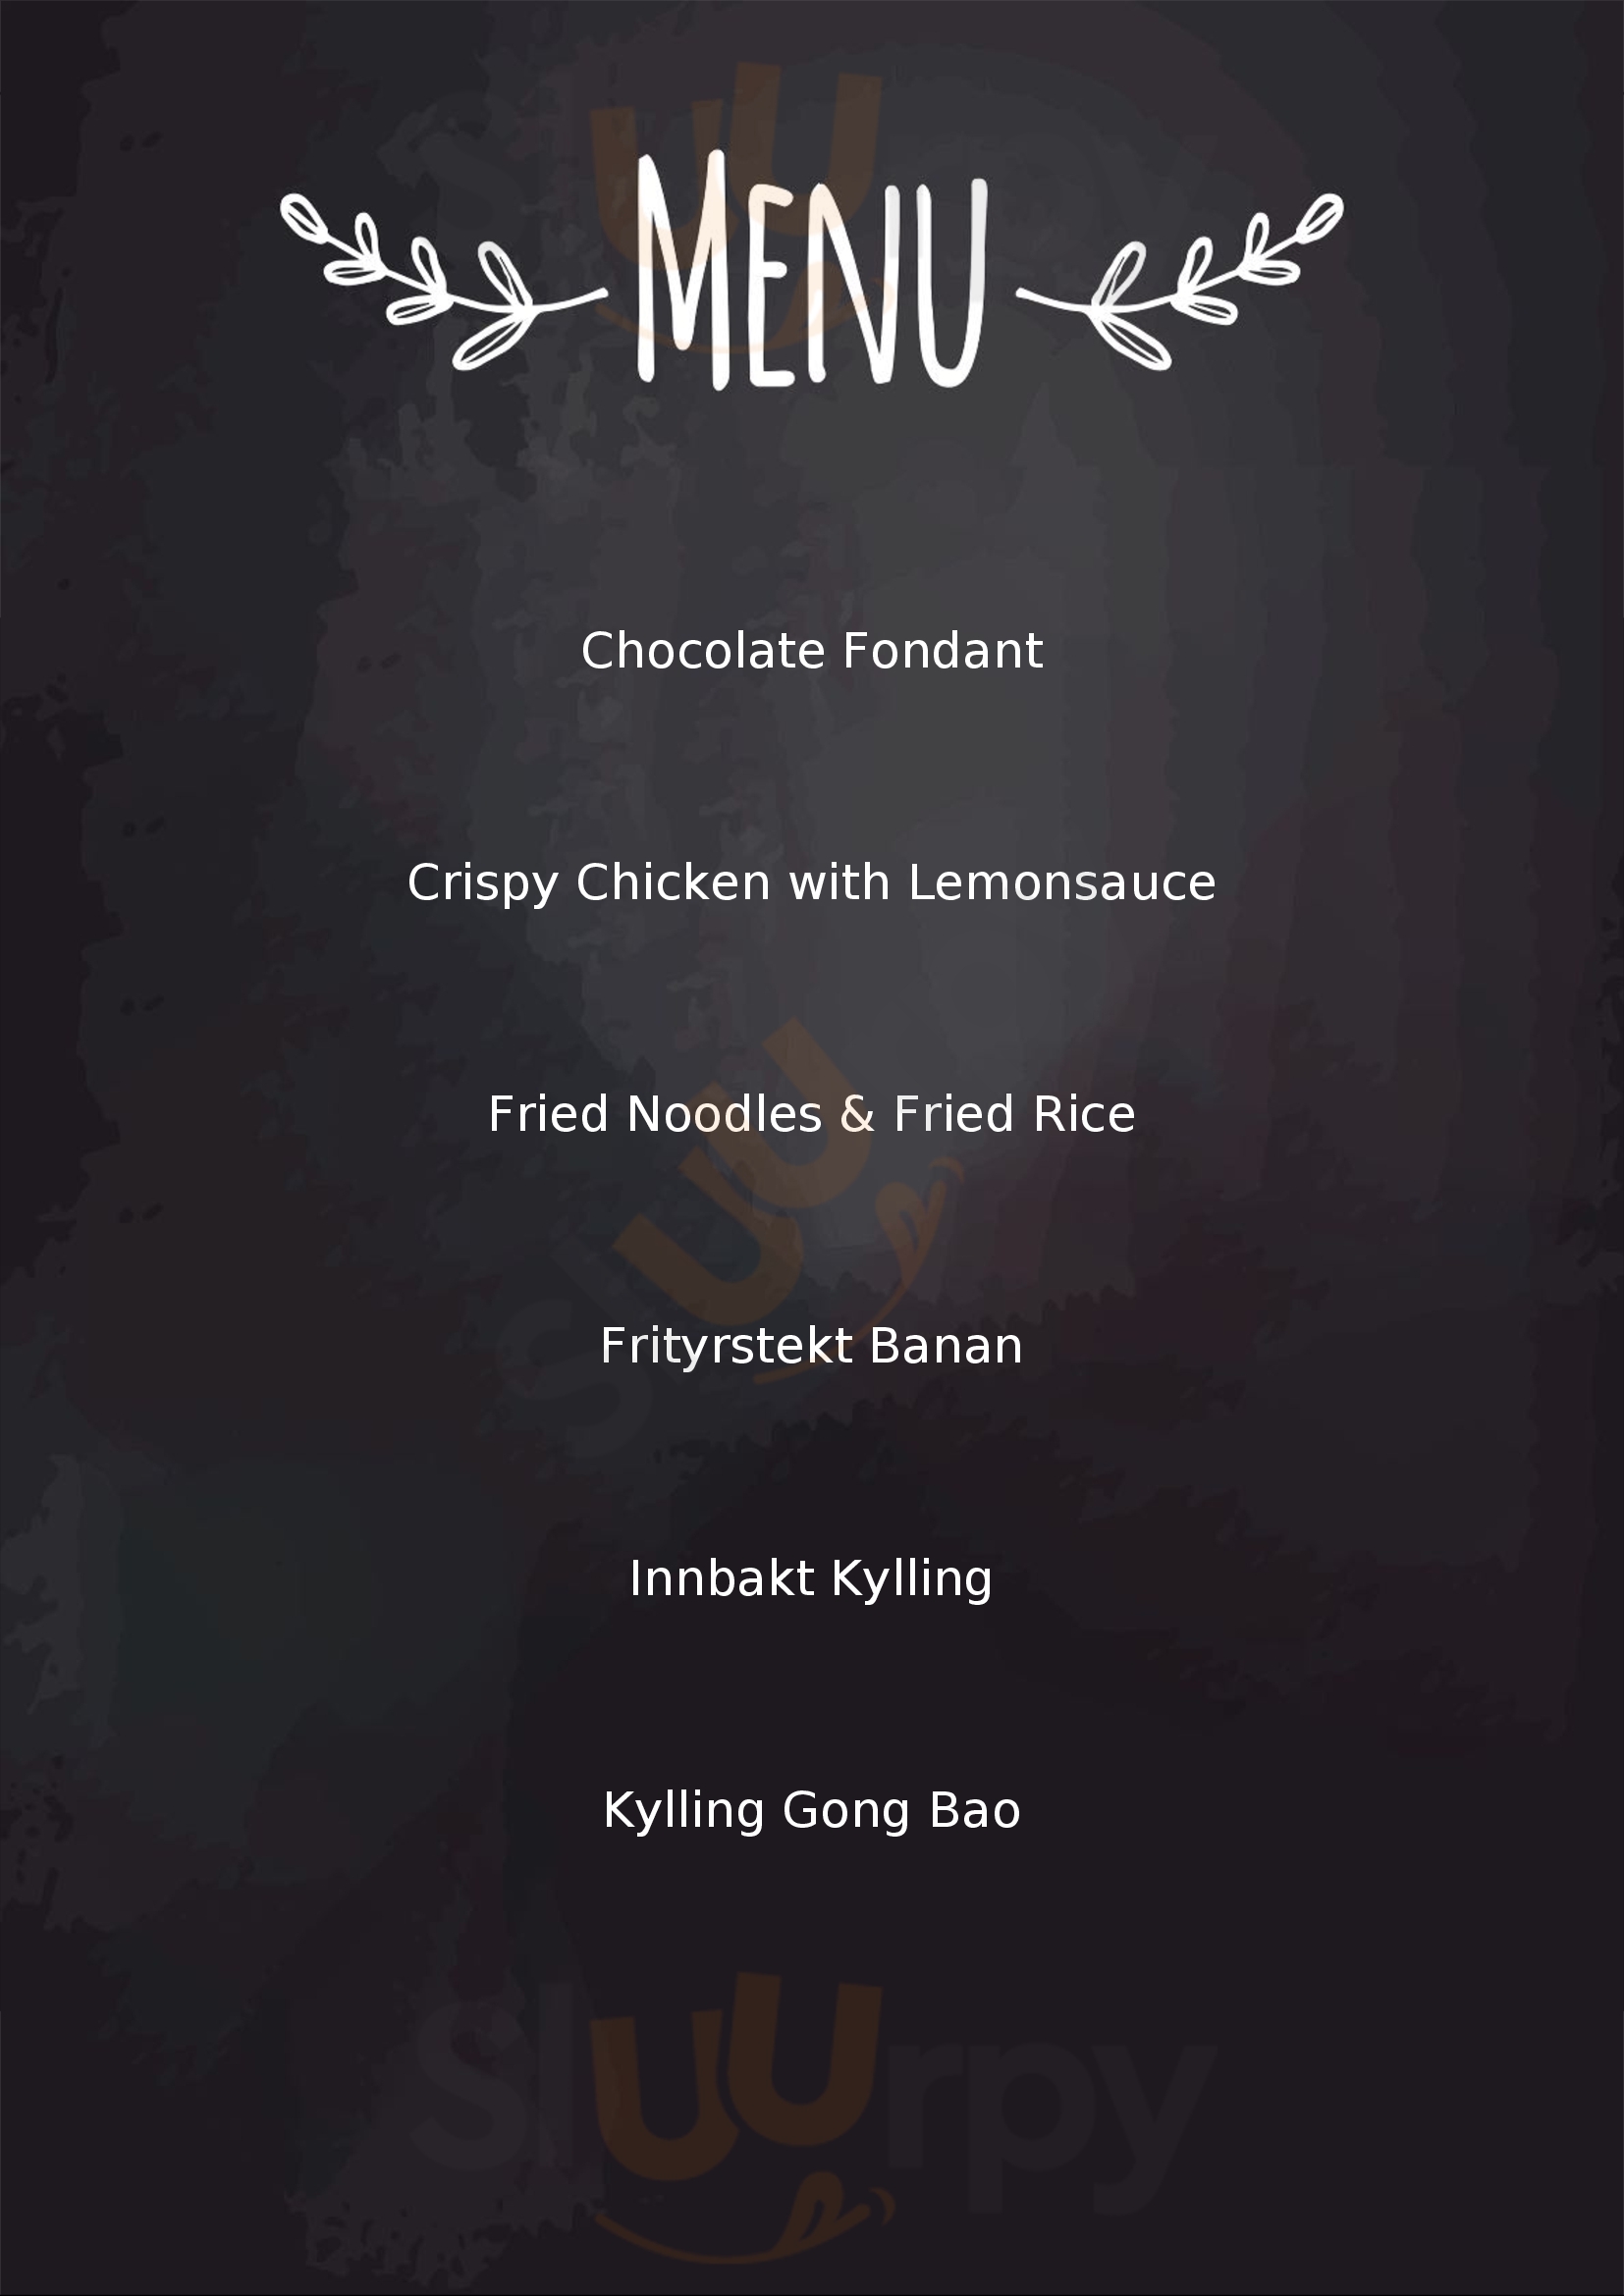 Long Cheng Resturant Ålesund Menu - 1